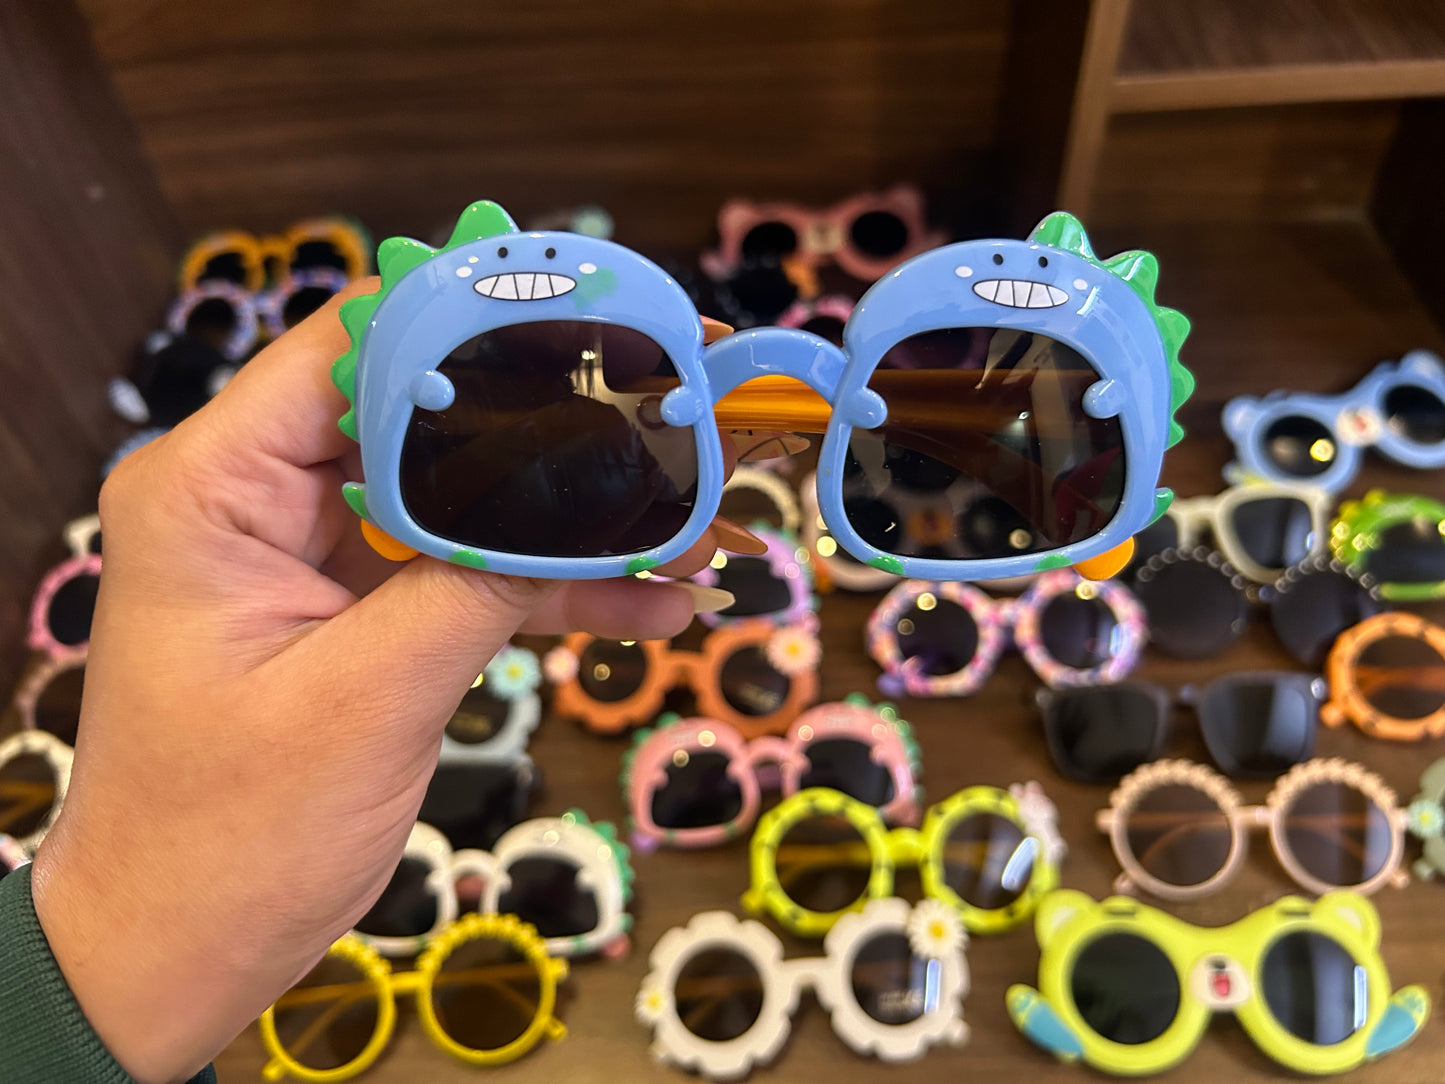 Dinosaur Sunglasses